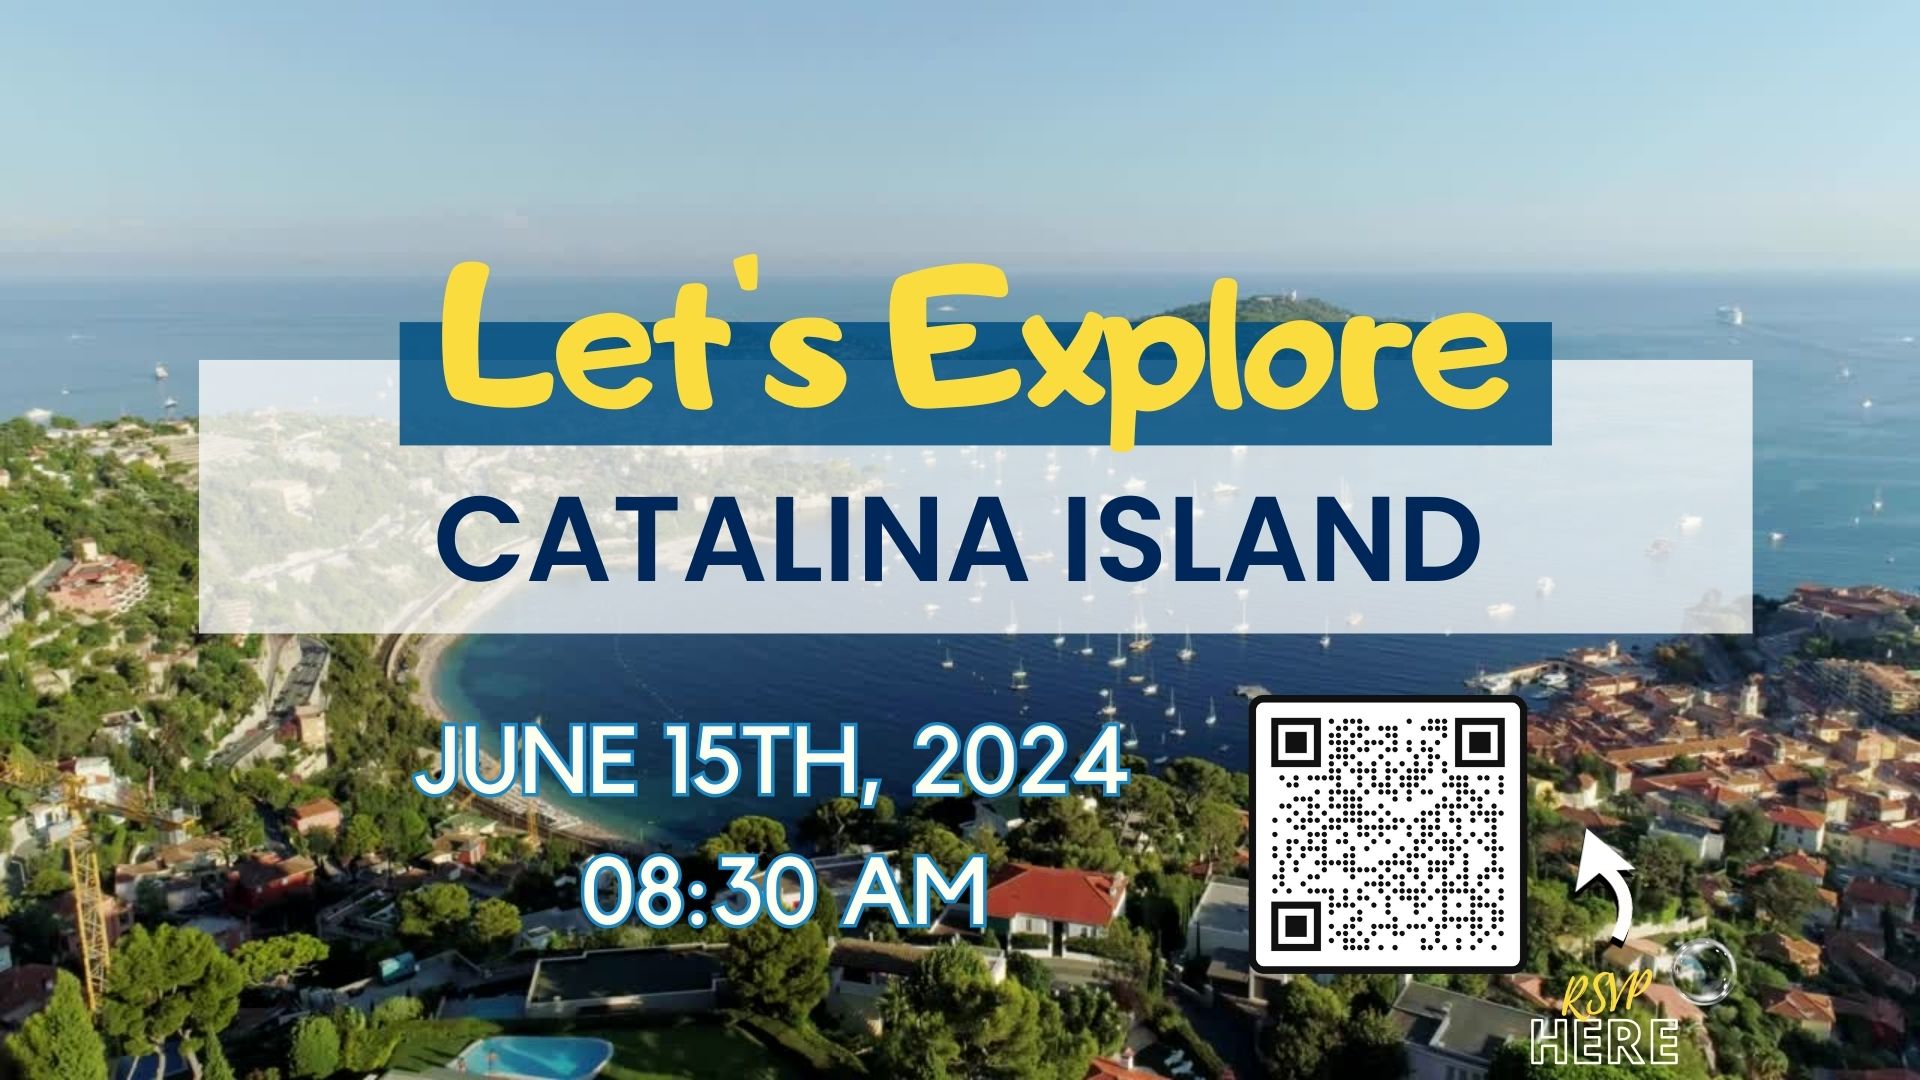 Let's explore Catalina Island. June 15th, 2024 at 8:30 AM